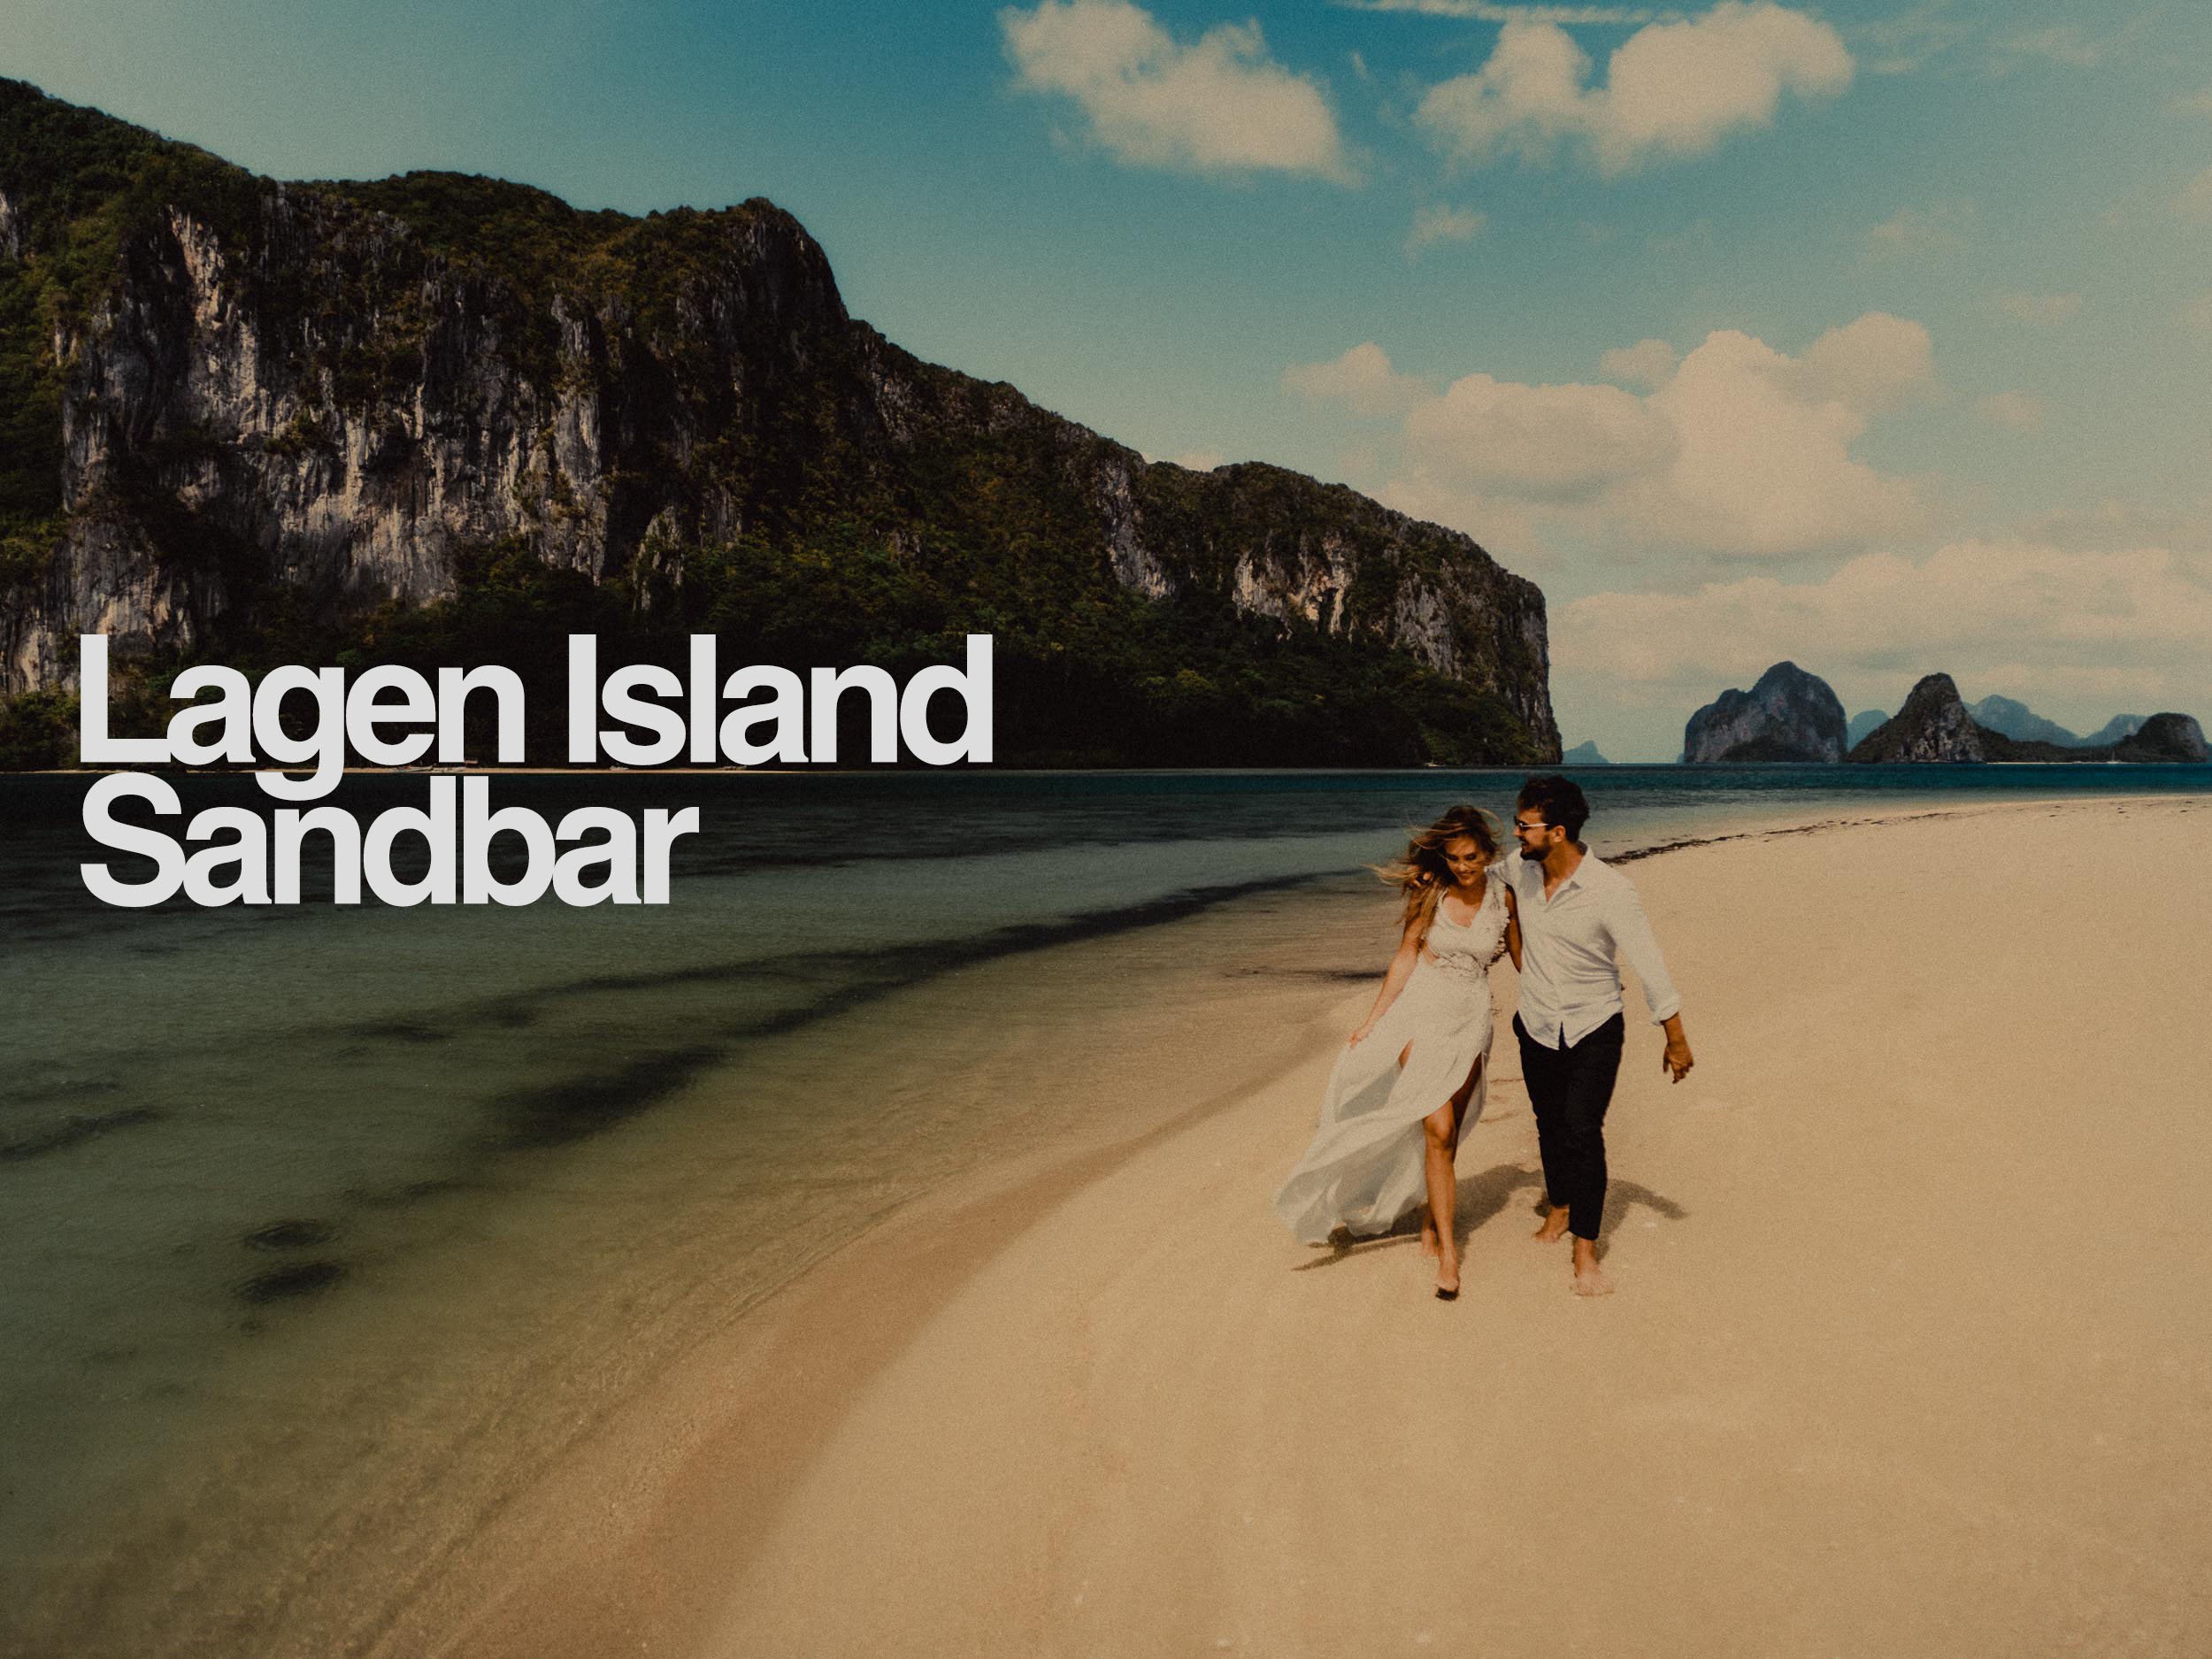 1-Lagen Island Sandbar The Sandbar at Lagen Island El Nido Resorts Palawan Philippines.jpg